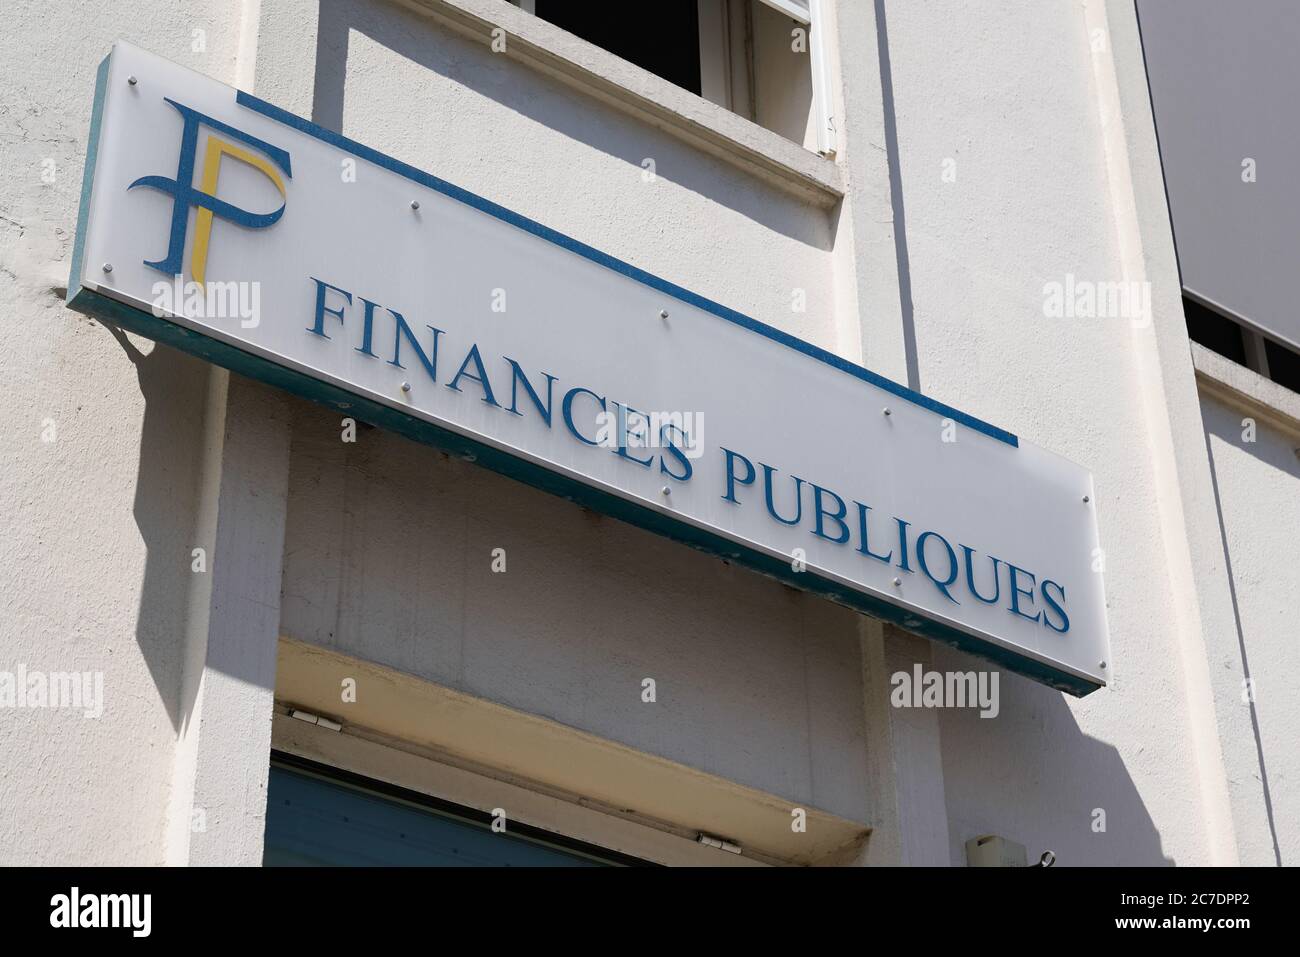 Bordeaux , Aquitaine / France - 07 07 2020 : Finances Publiques logo text sign on wall building of French public finance administration Stock Photo